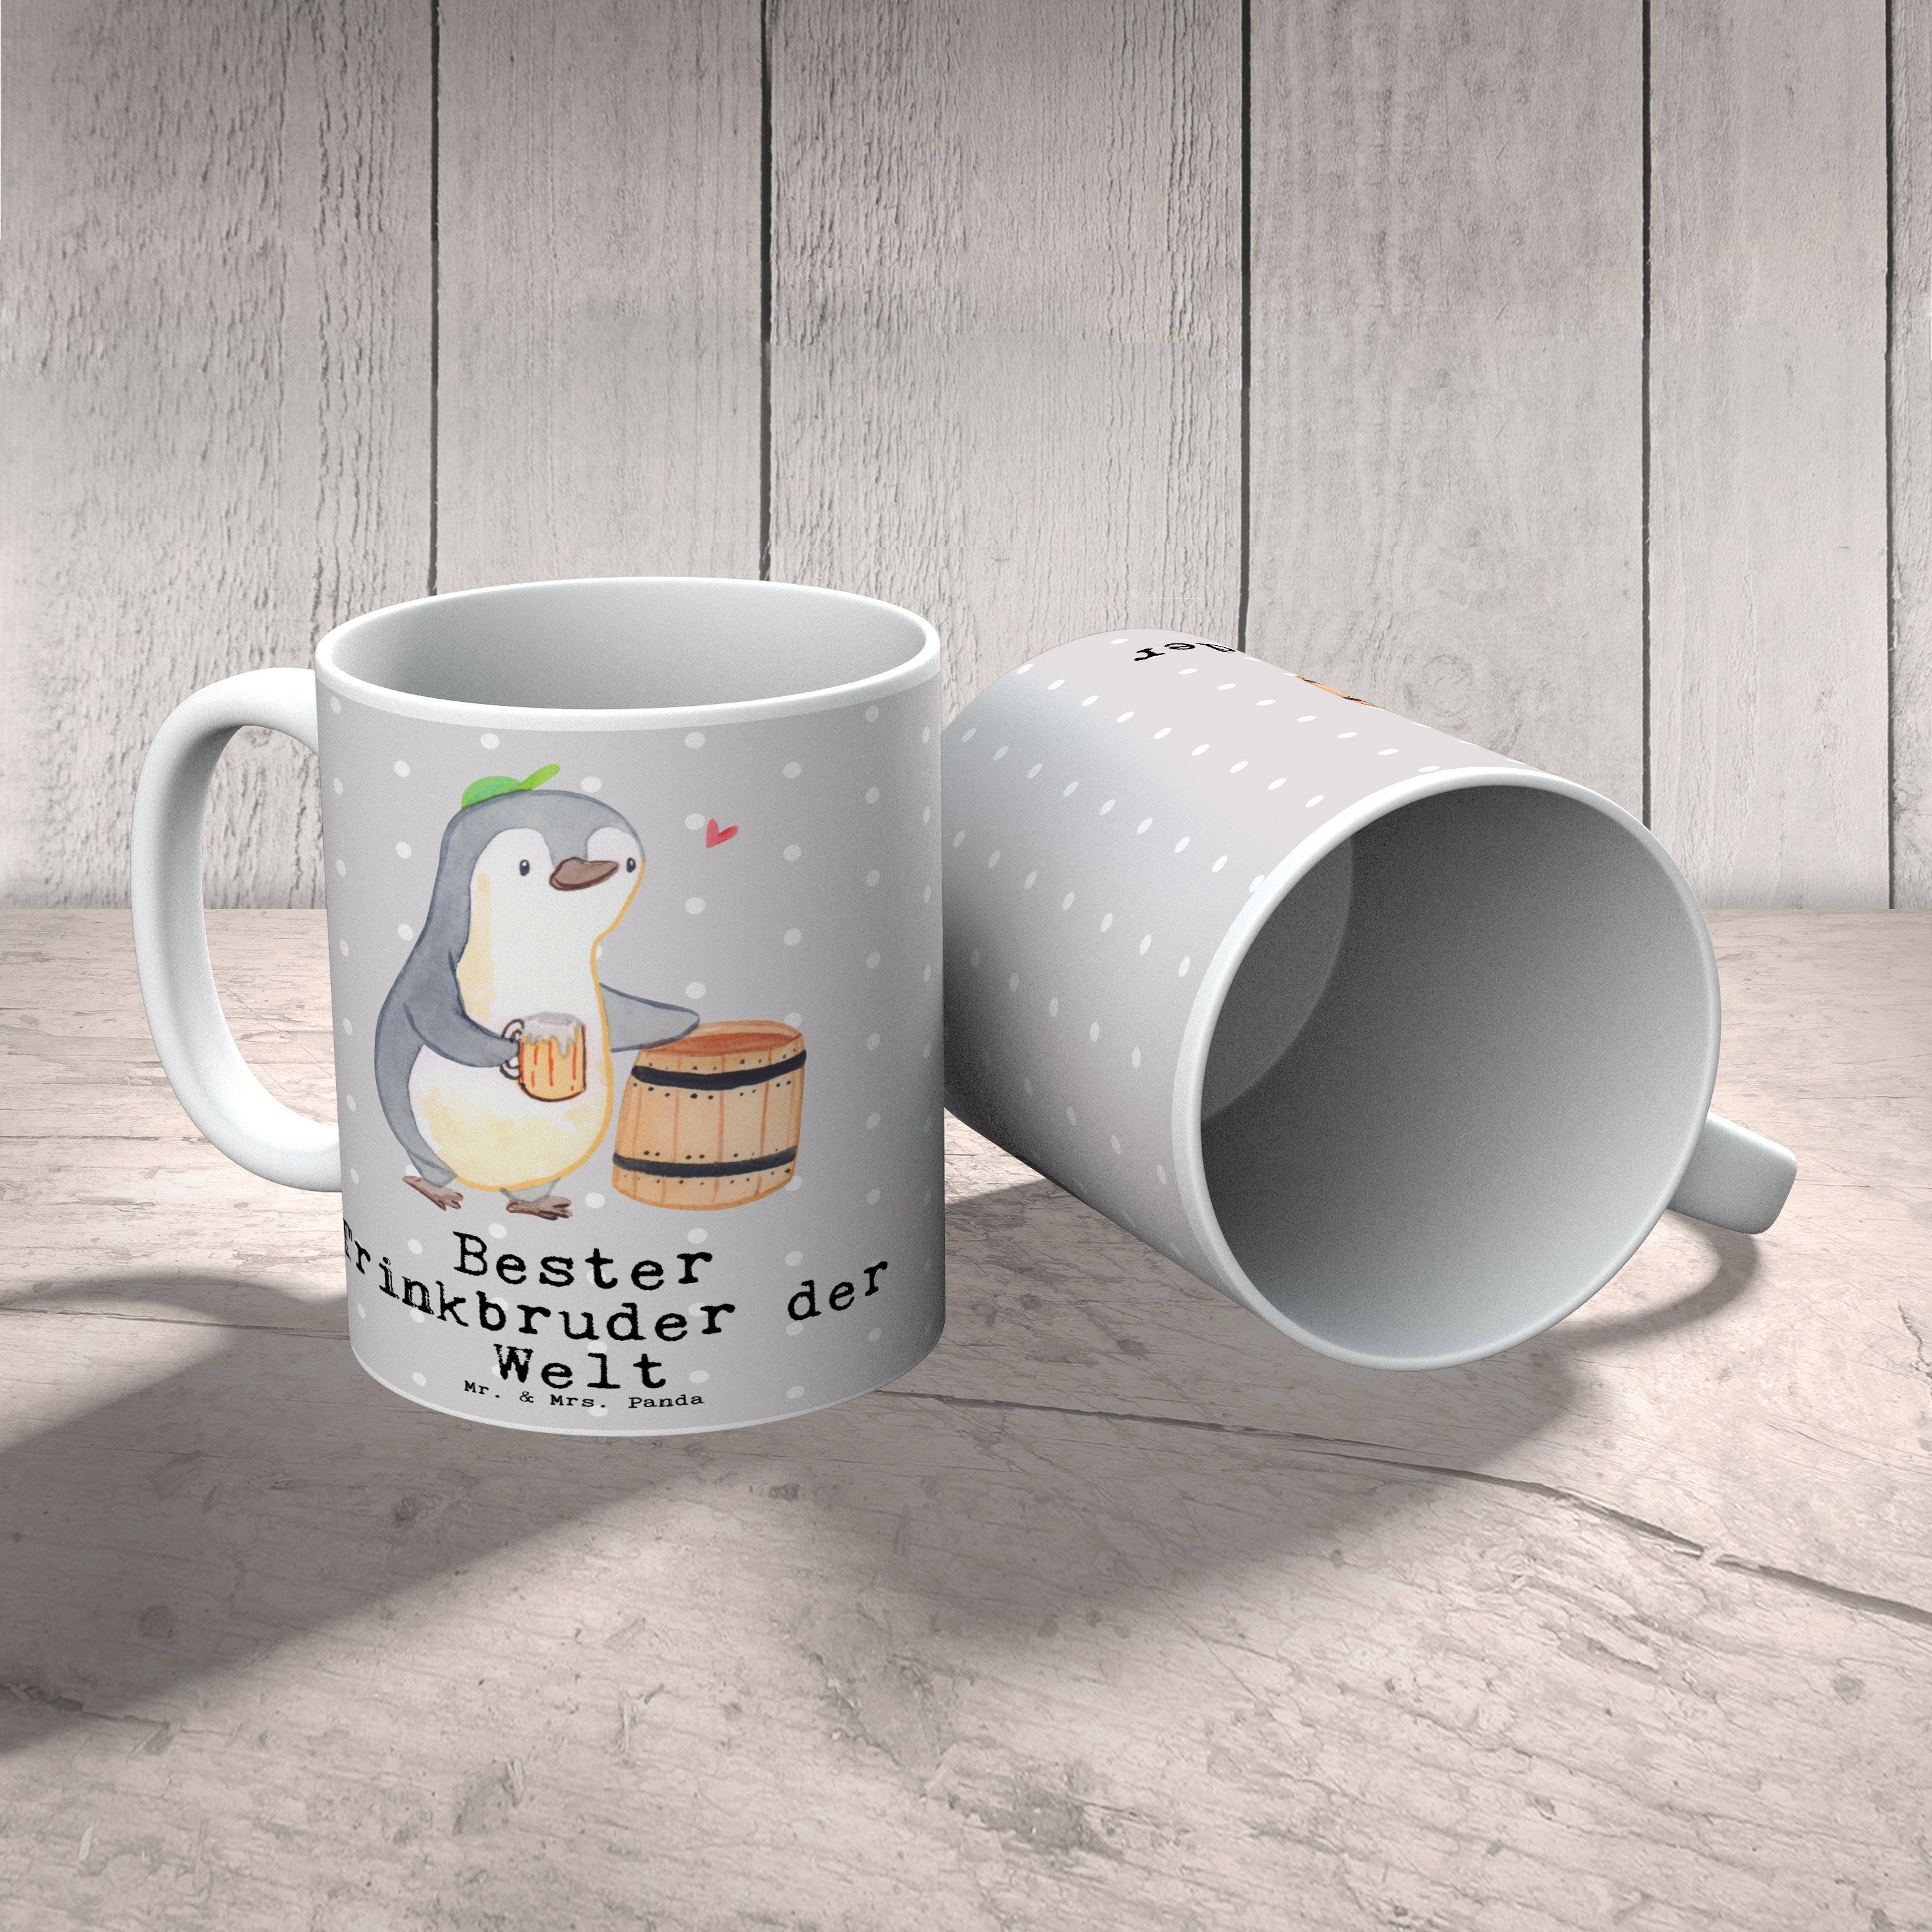 Pastell - Panda Pinguin & Mr. Geschenk, Mrs. Grau Trinkbruder Welt Keramik Bester Becher, - der Tasse